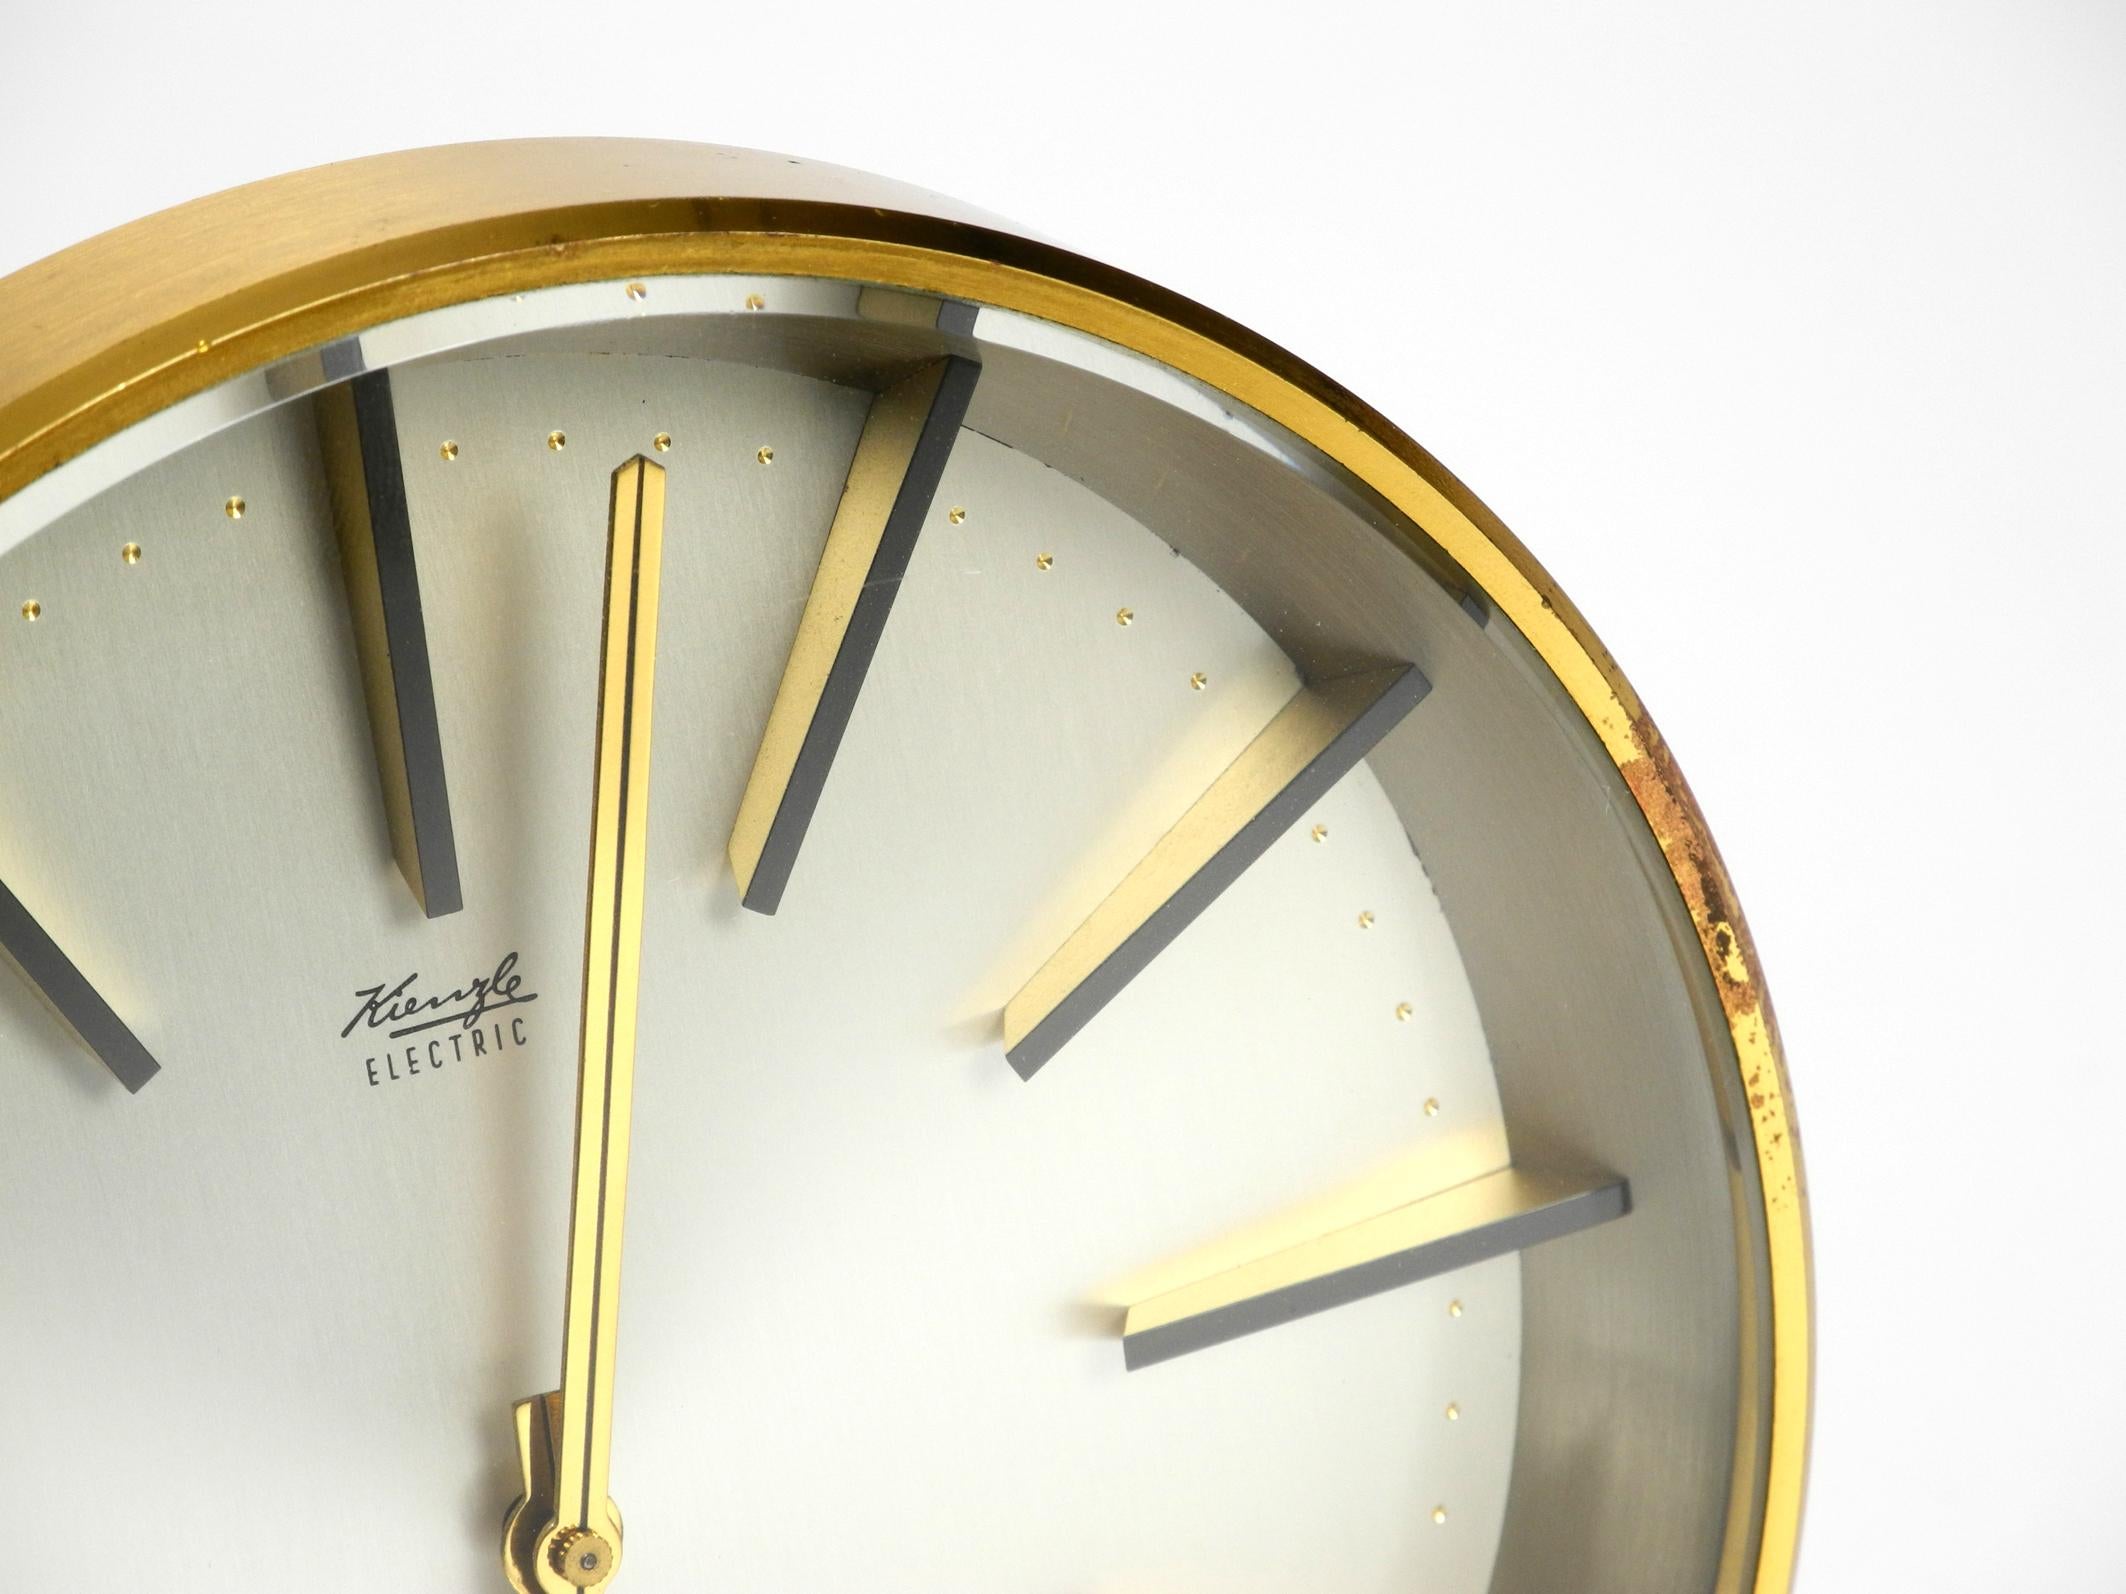 Beautiful original 1960s heavy brass table clock from Kienzle Electric 9